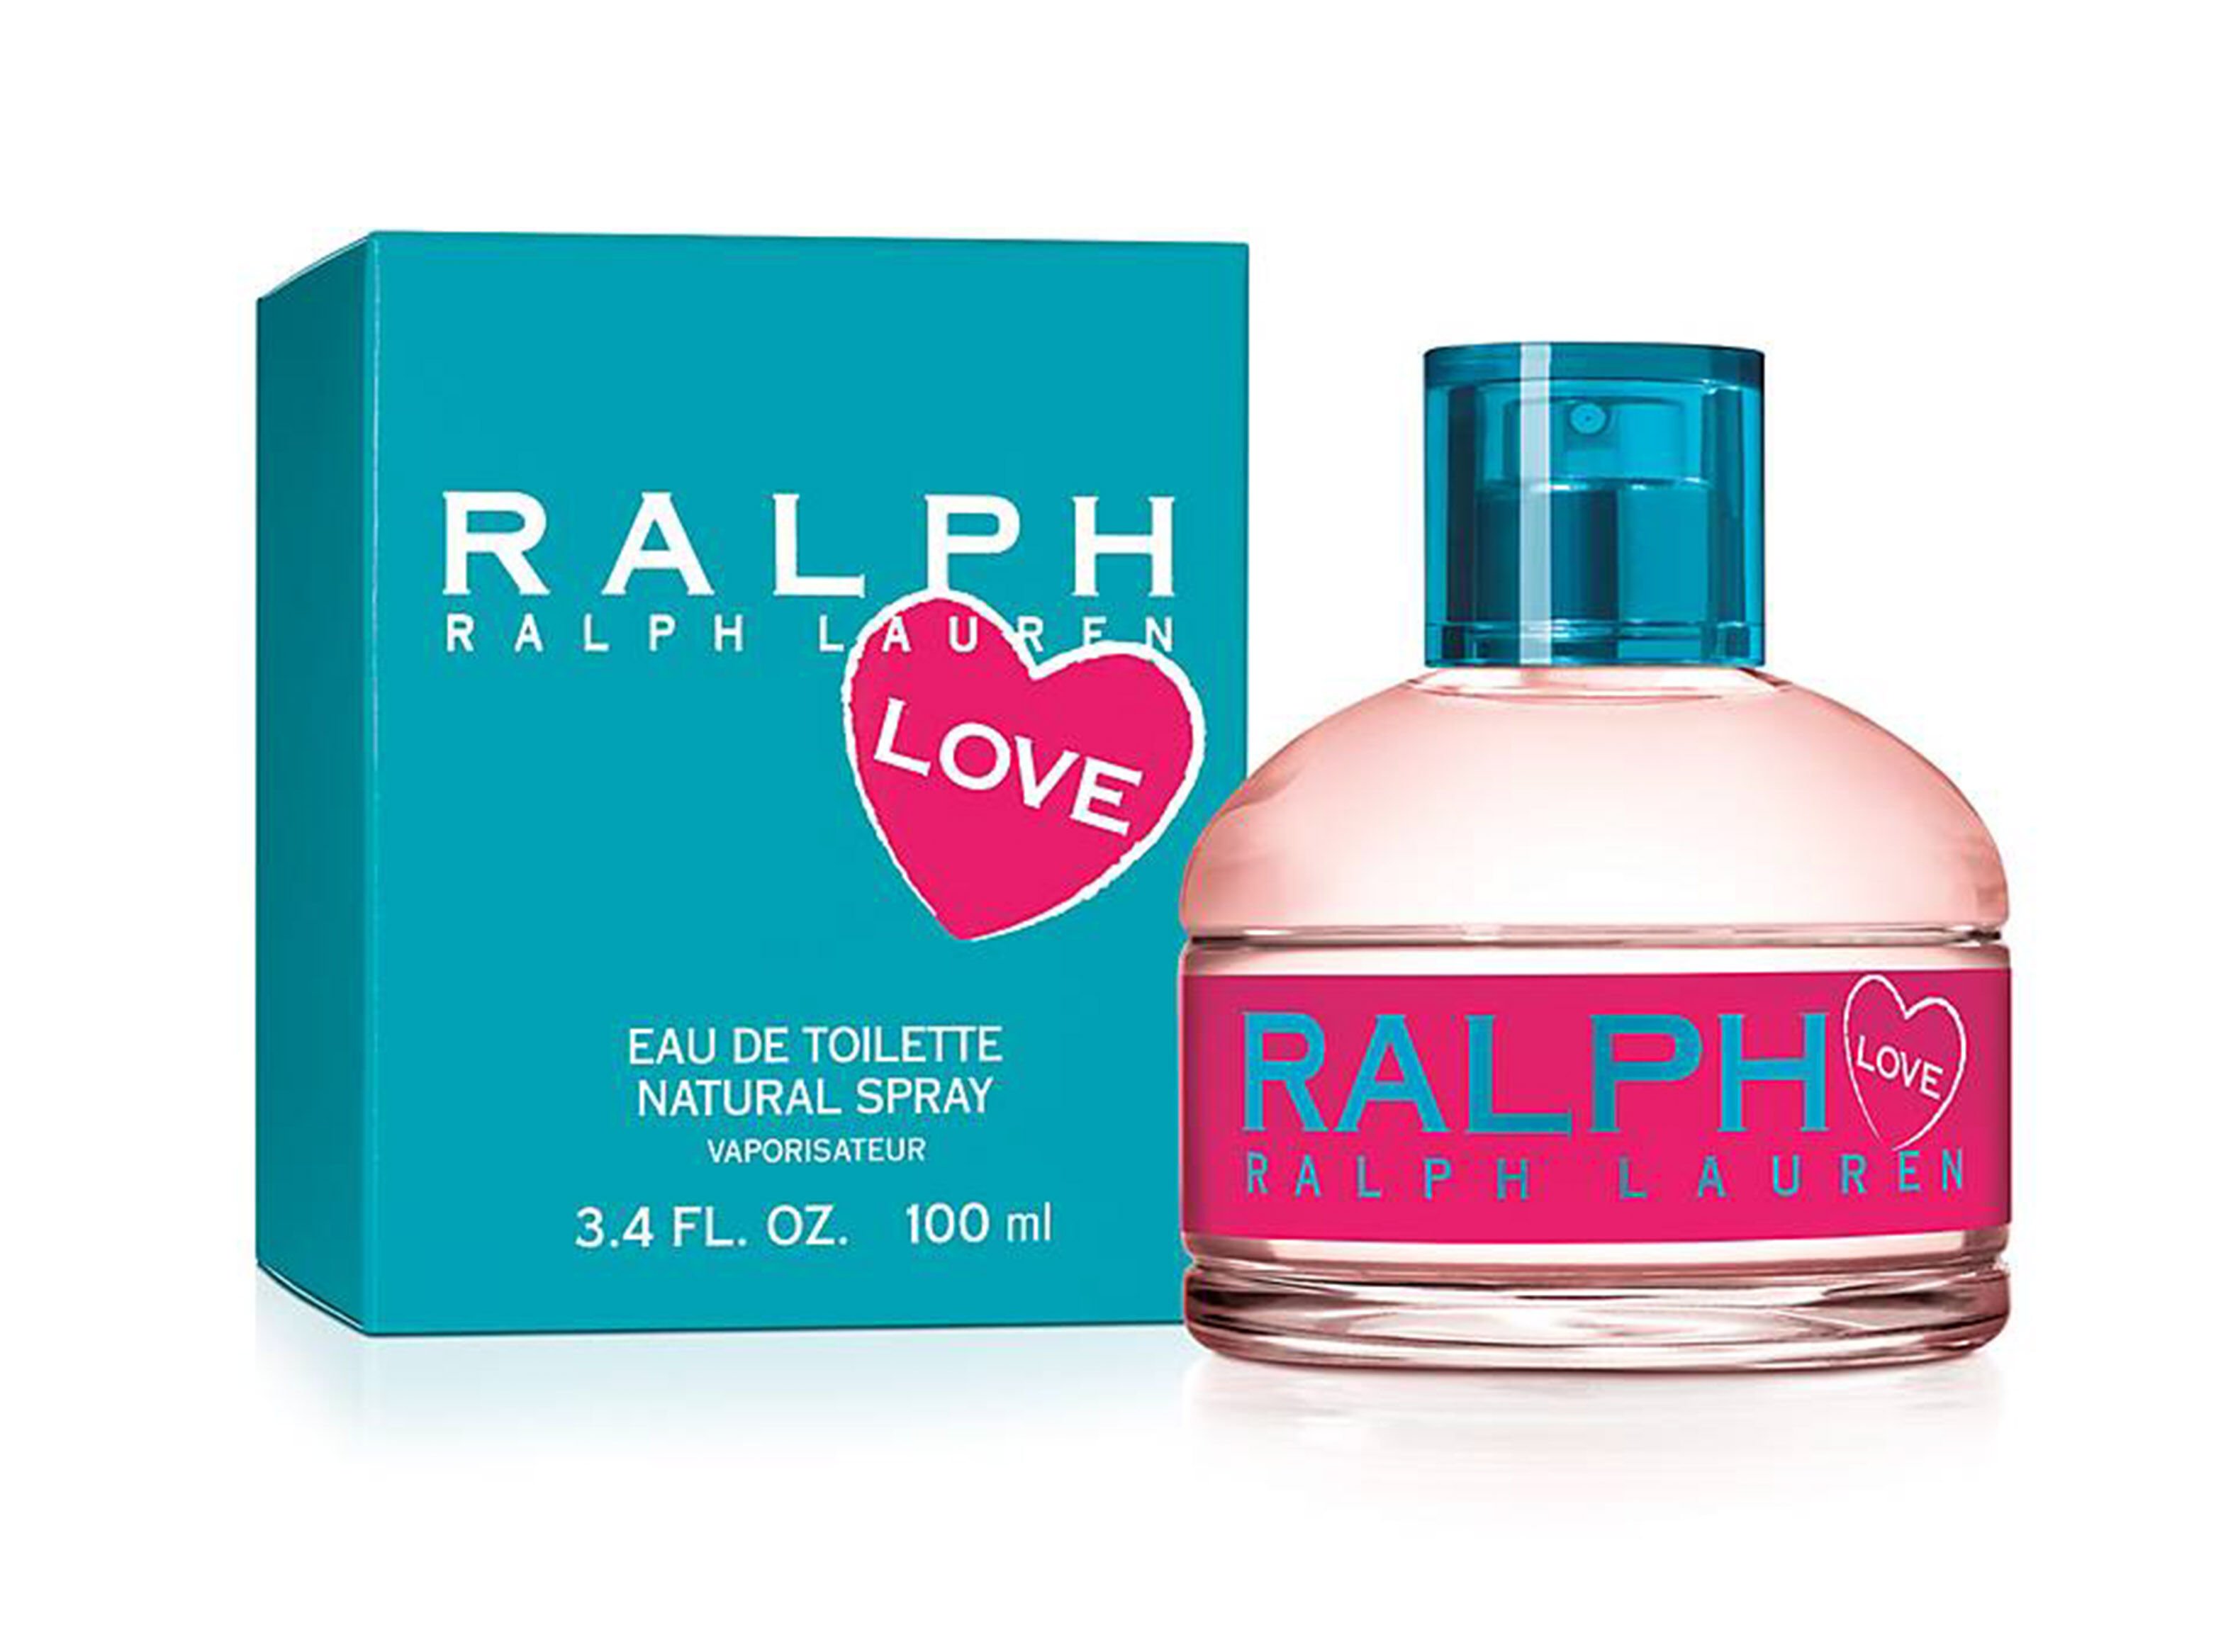 perfume ralph